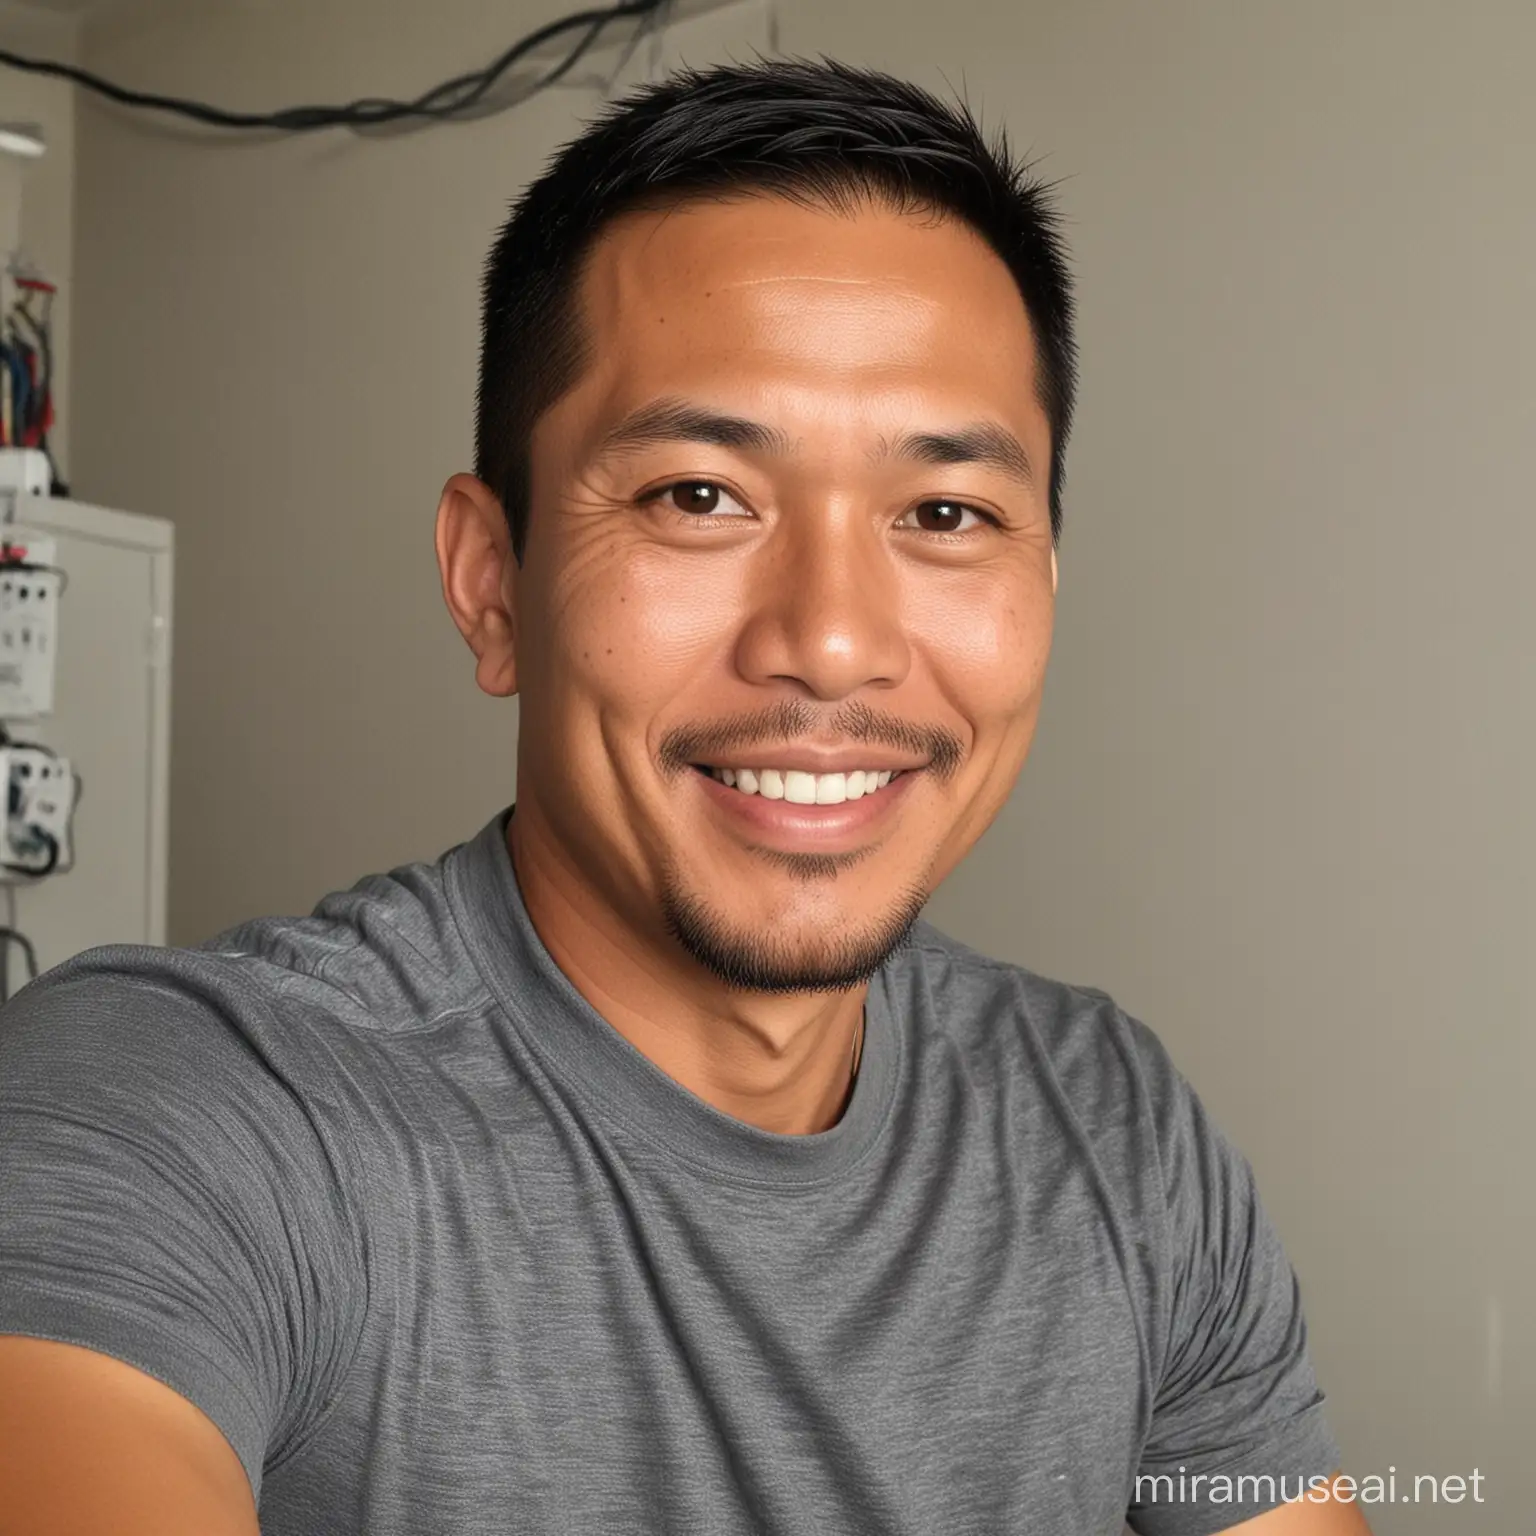 filipino man, 41, electrician, canadian, happy